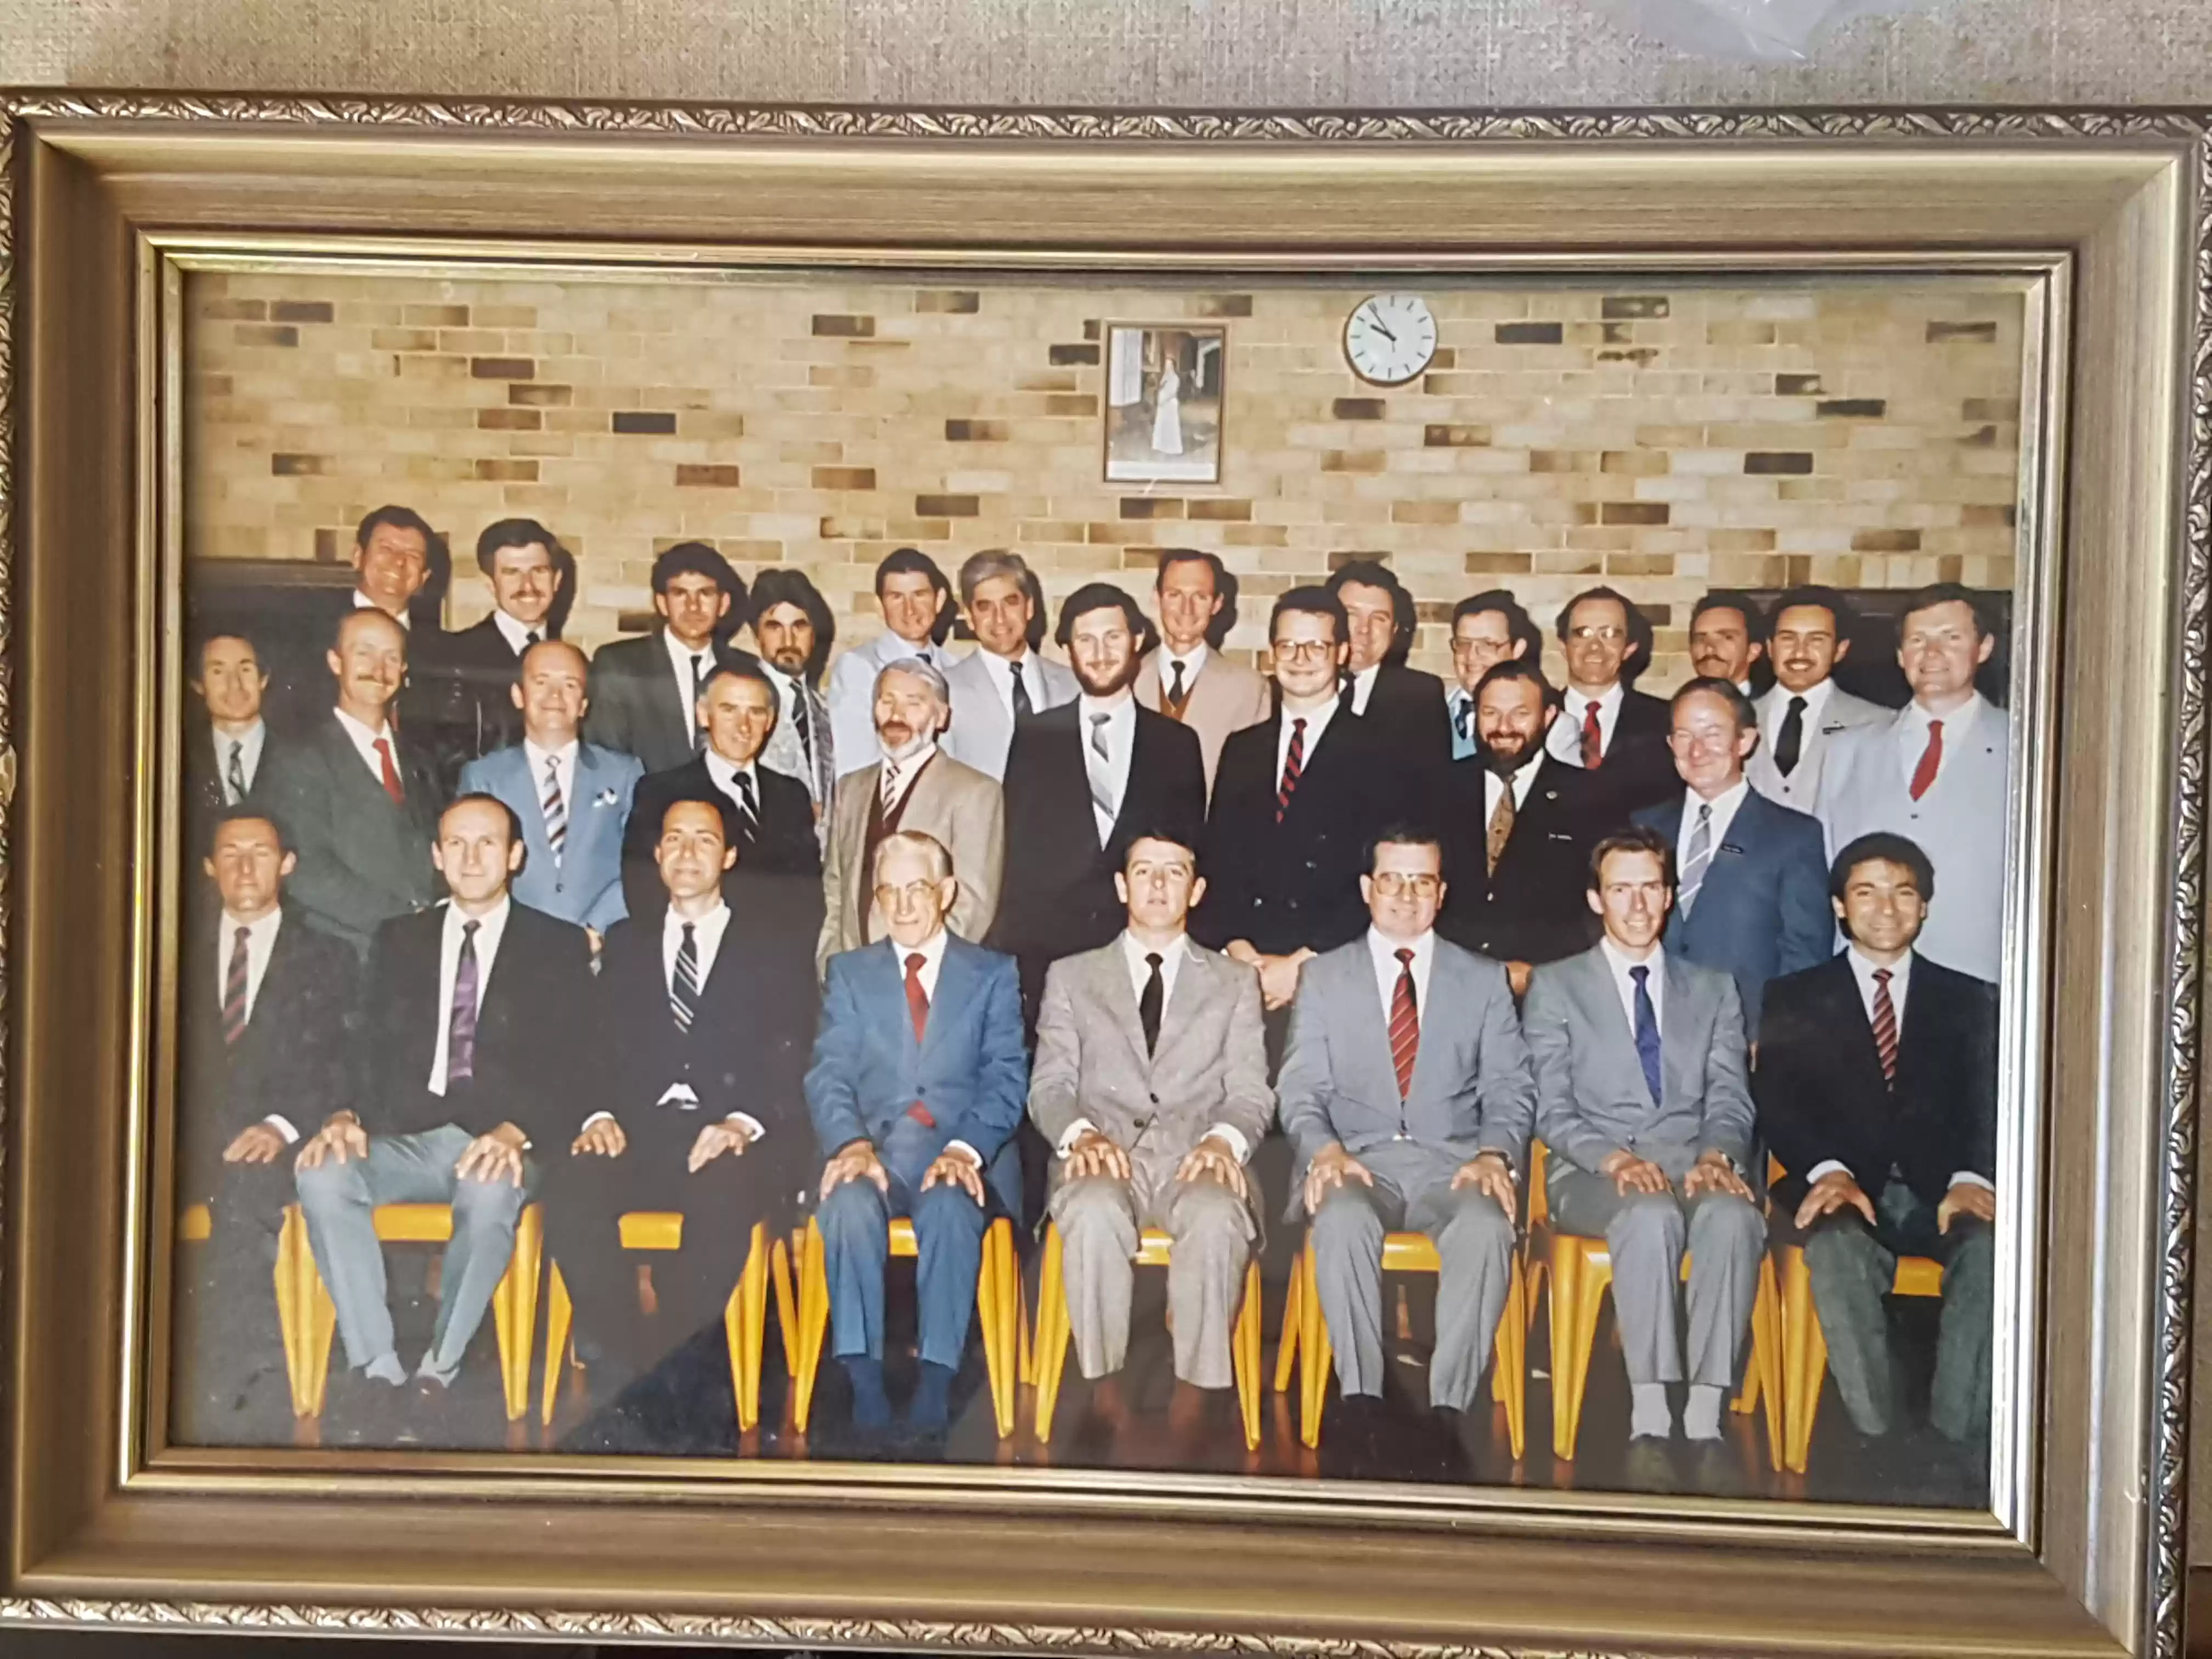 Sydney South Spokesman's Club, c1987